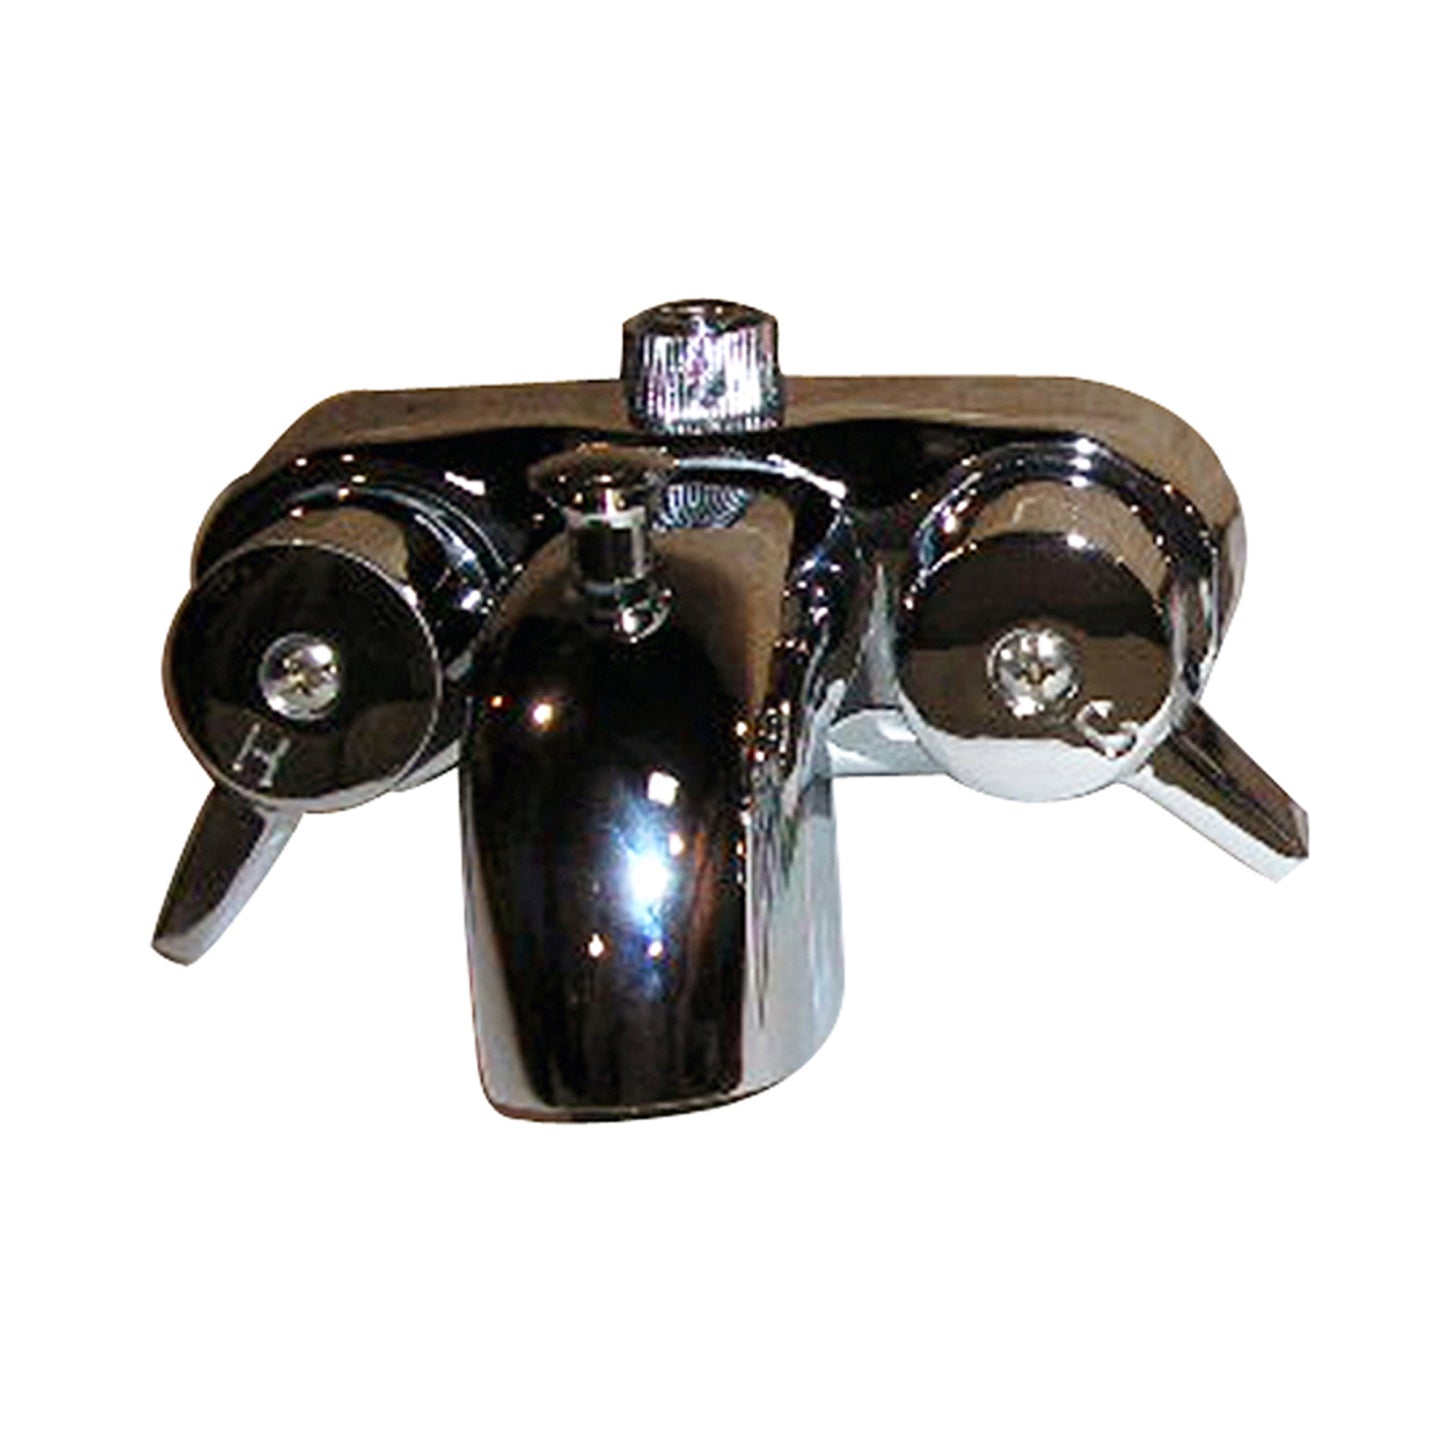 Basic Tub Faucet Kit with Riser 48" D-Rod, Shower Head, Polished Chrome